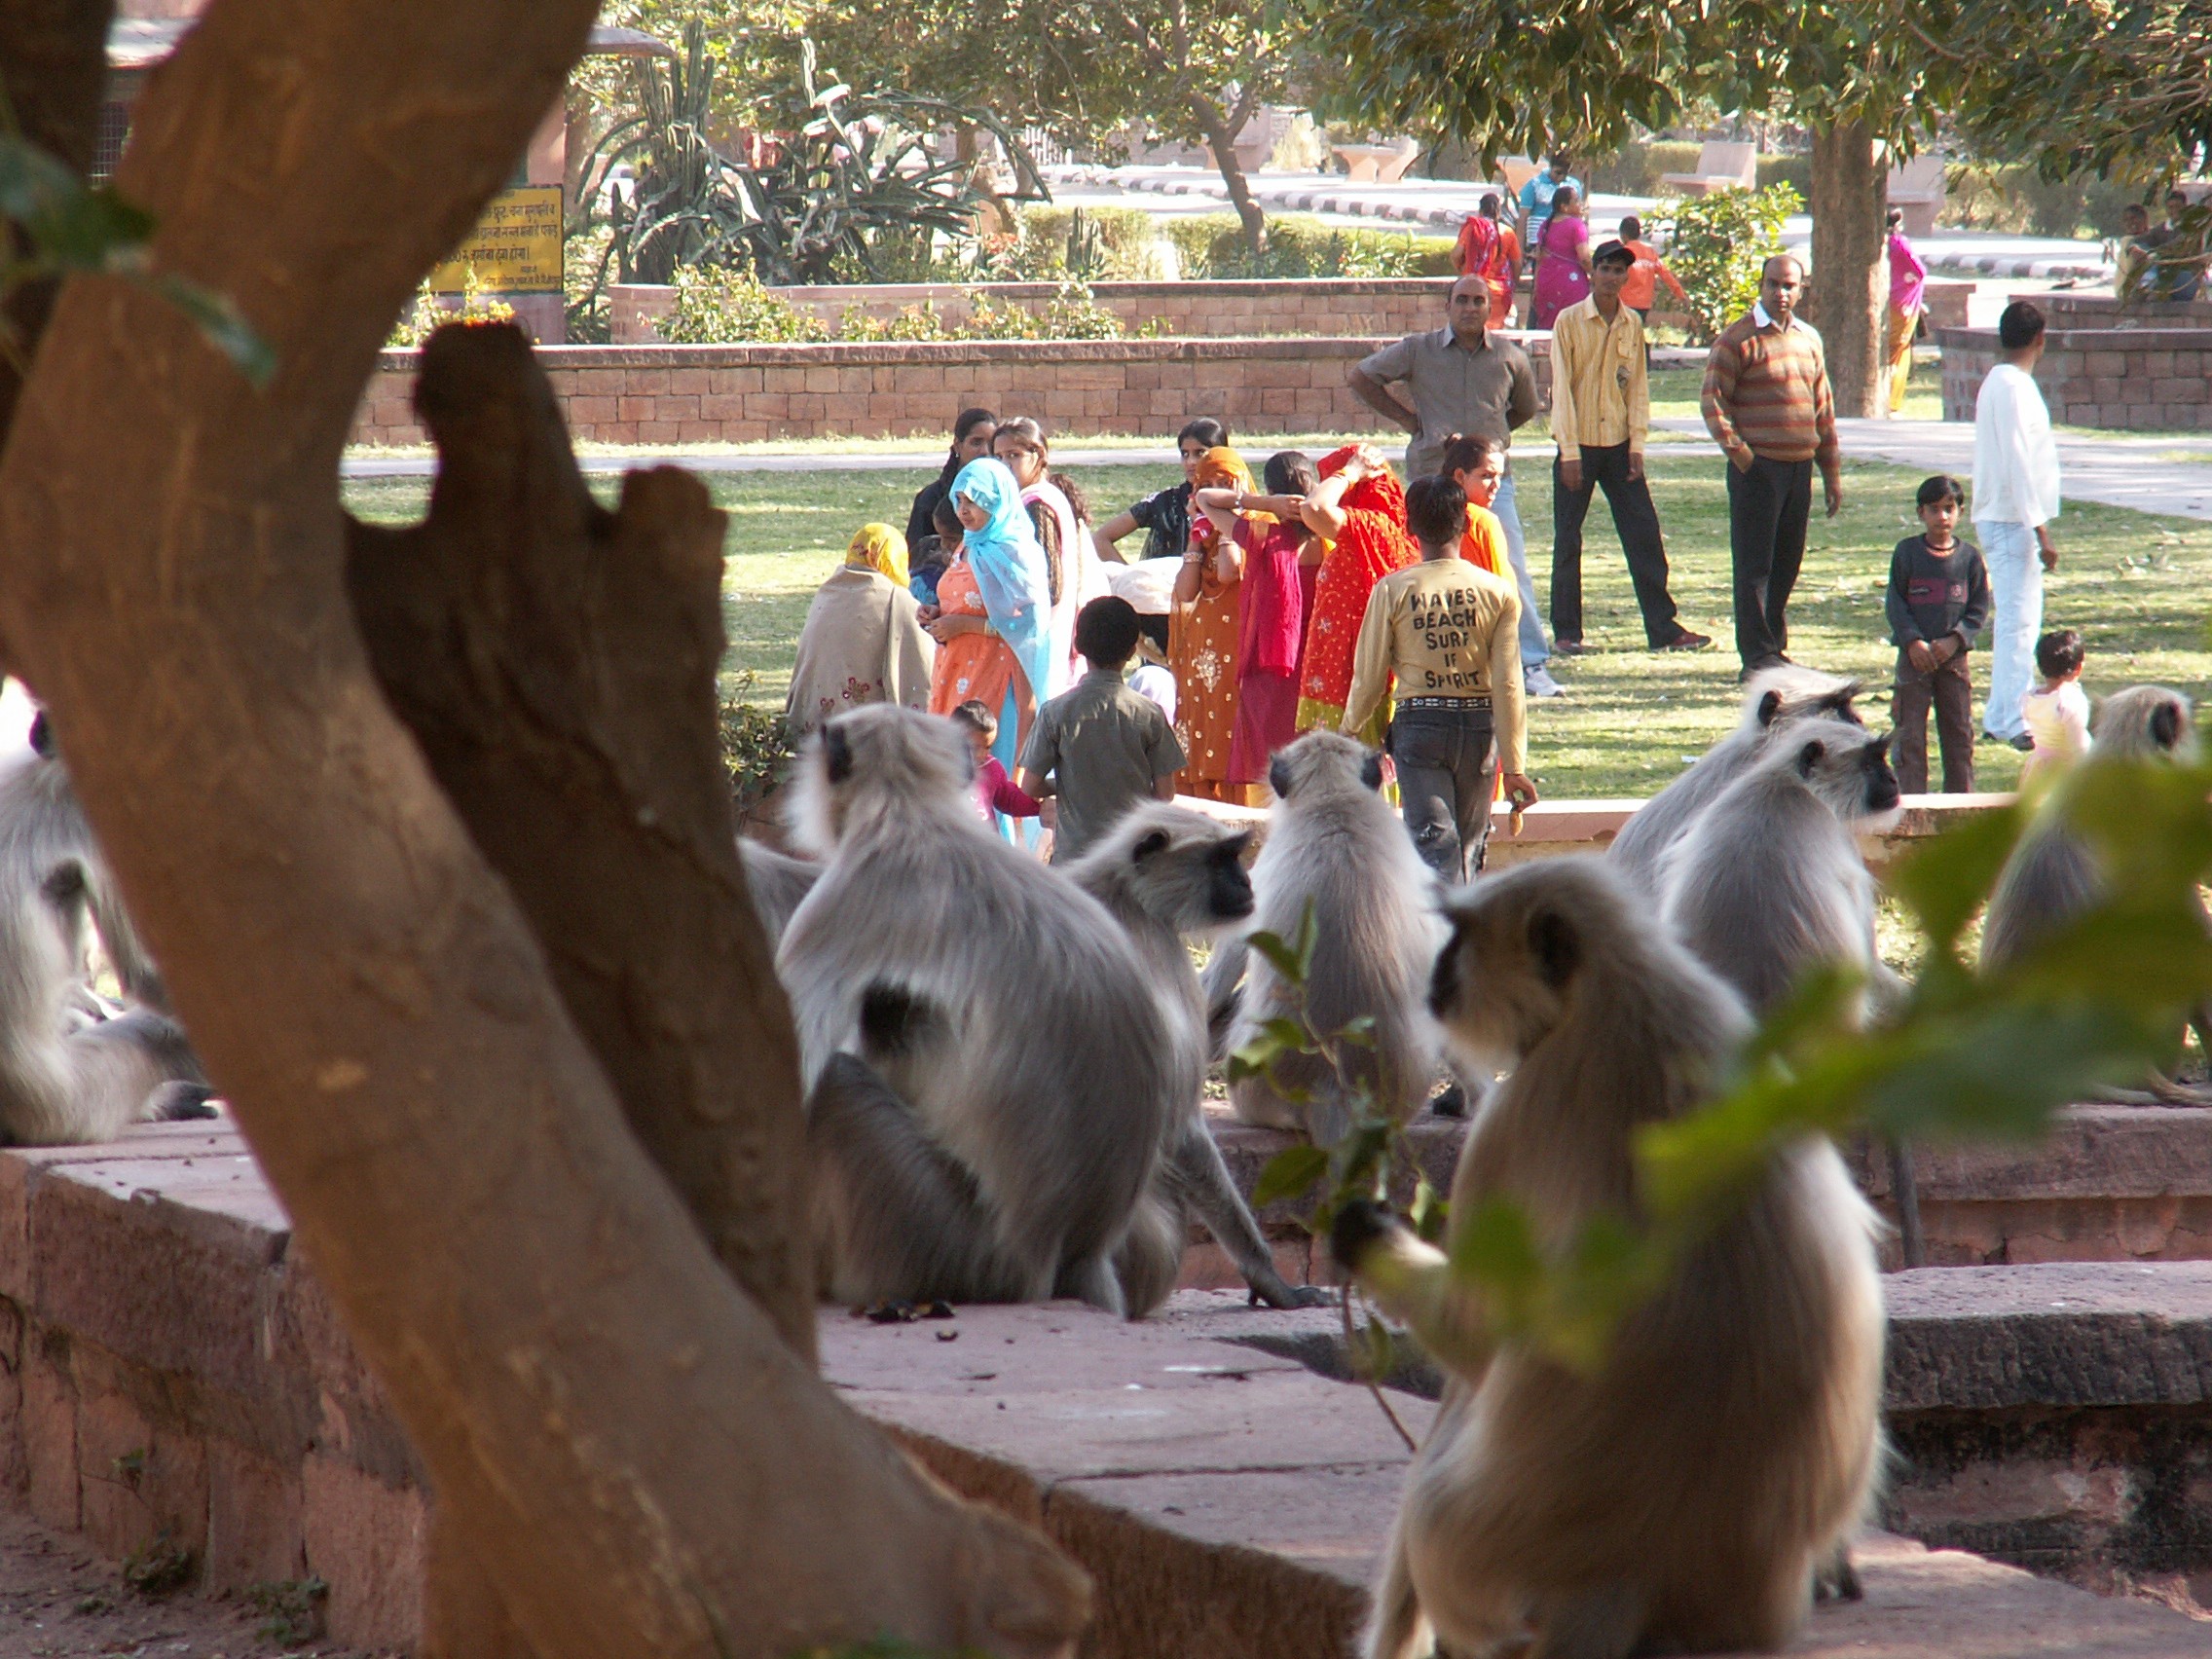 Monkeys in Mandore Gardens near Jodhpur, Rajasthan